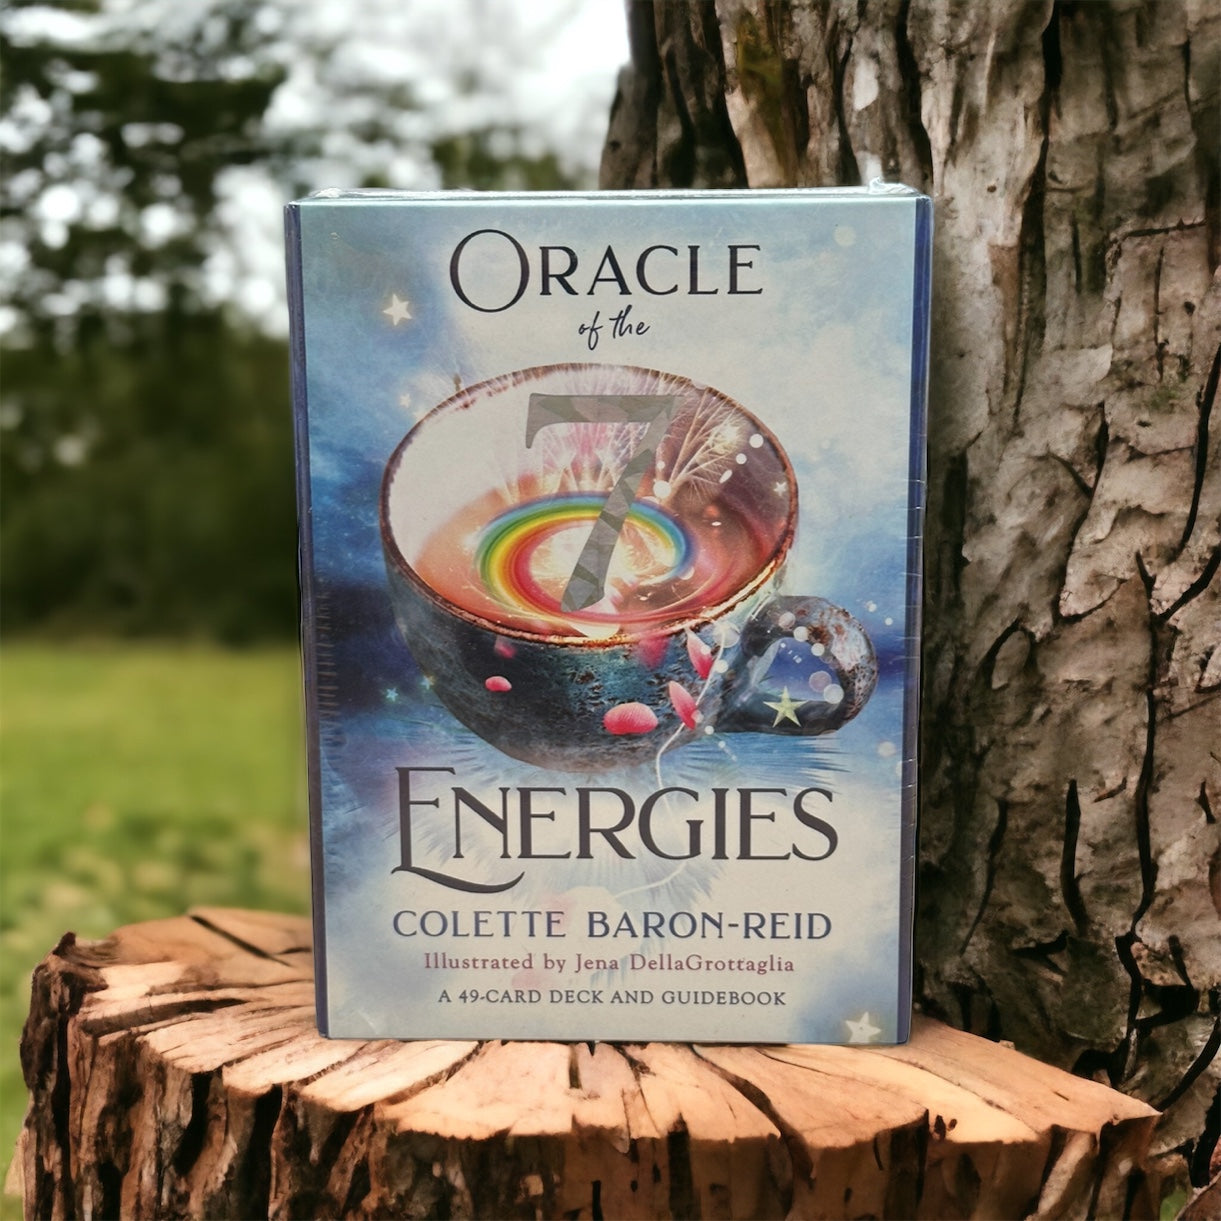 Oracle of the 7 energies ❤️